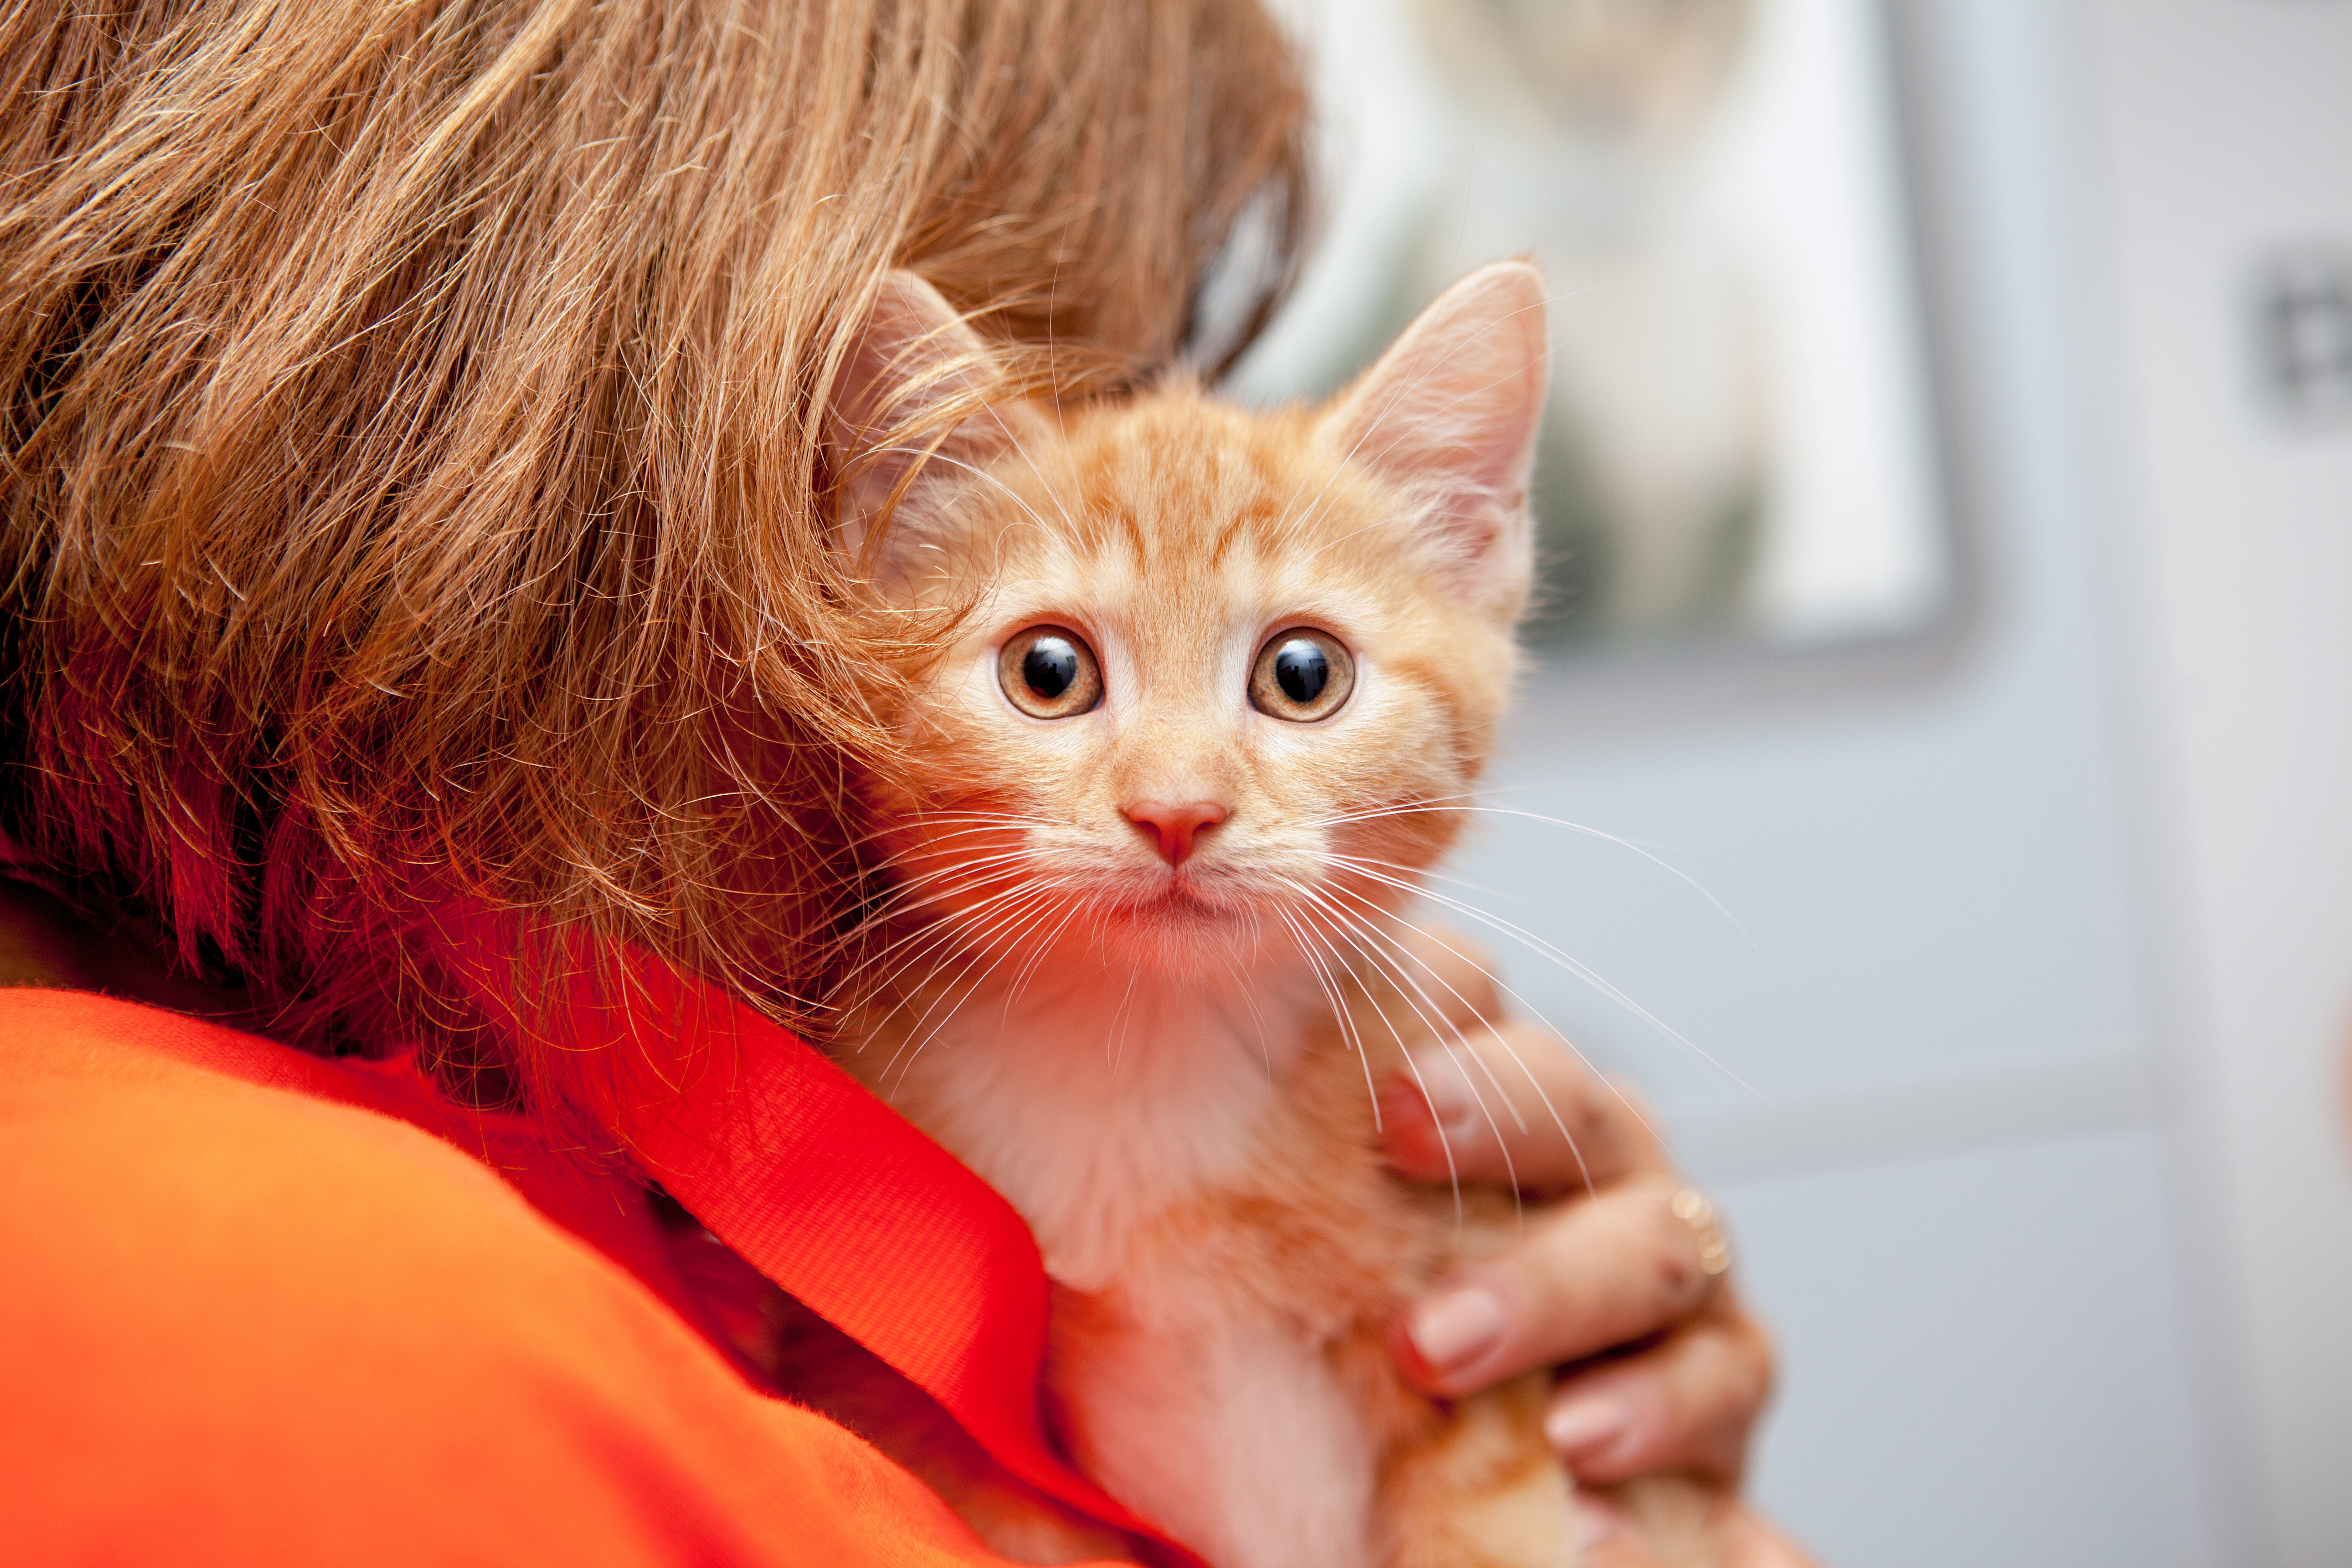 Person cradling an orange tabby kitten